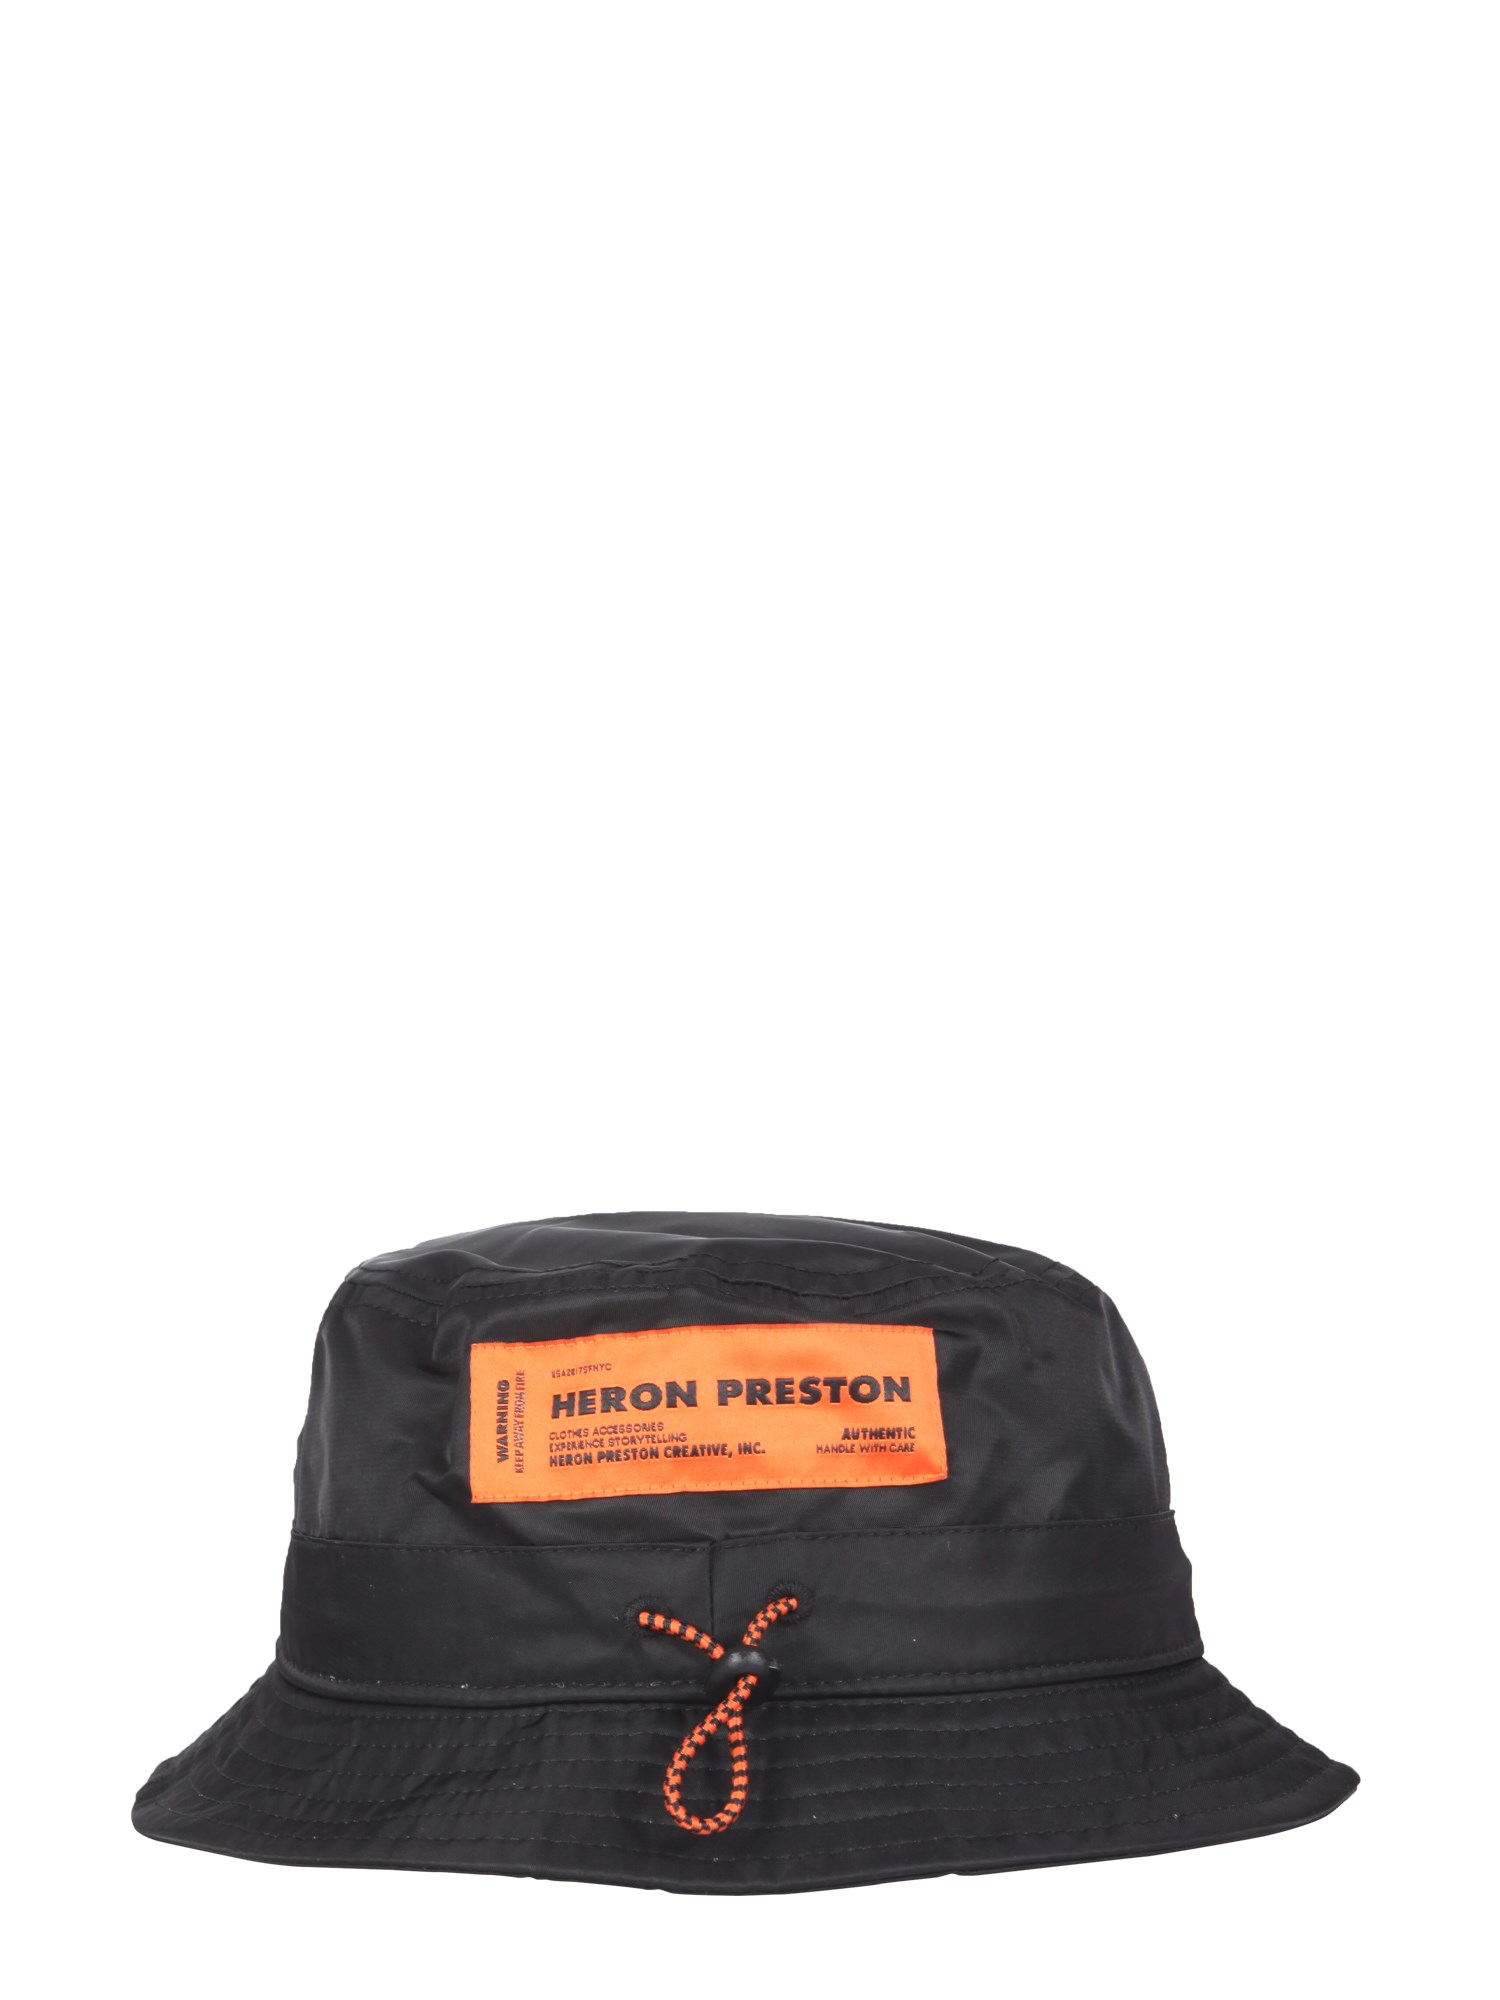 heron preston bucket hat with ctnmb logo